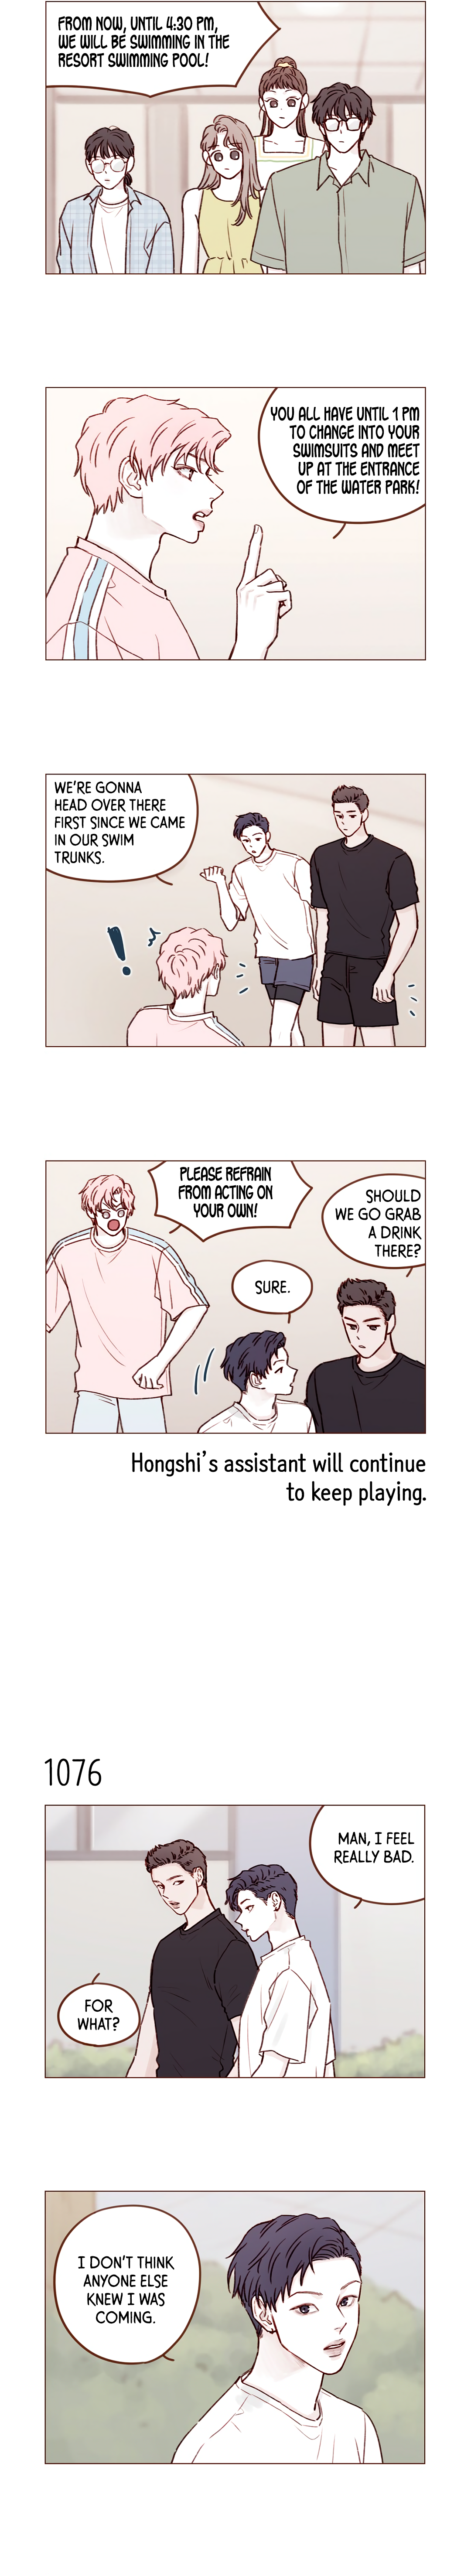 Hongshi Loves Me! - Page 4